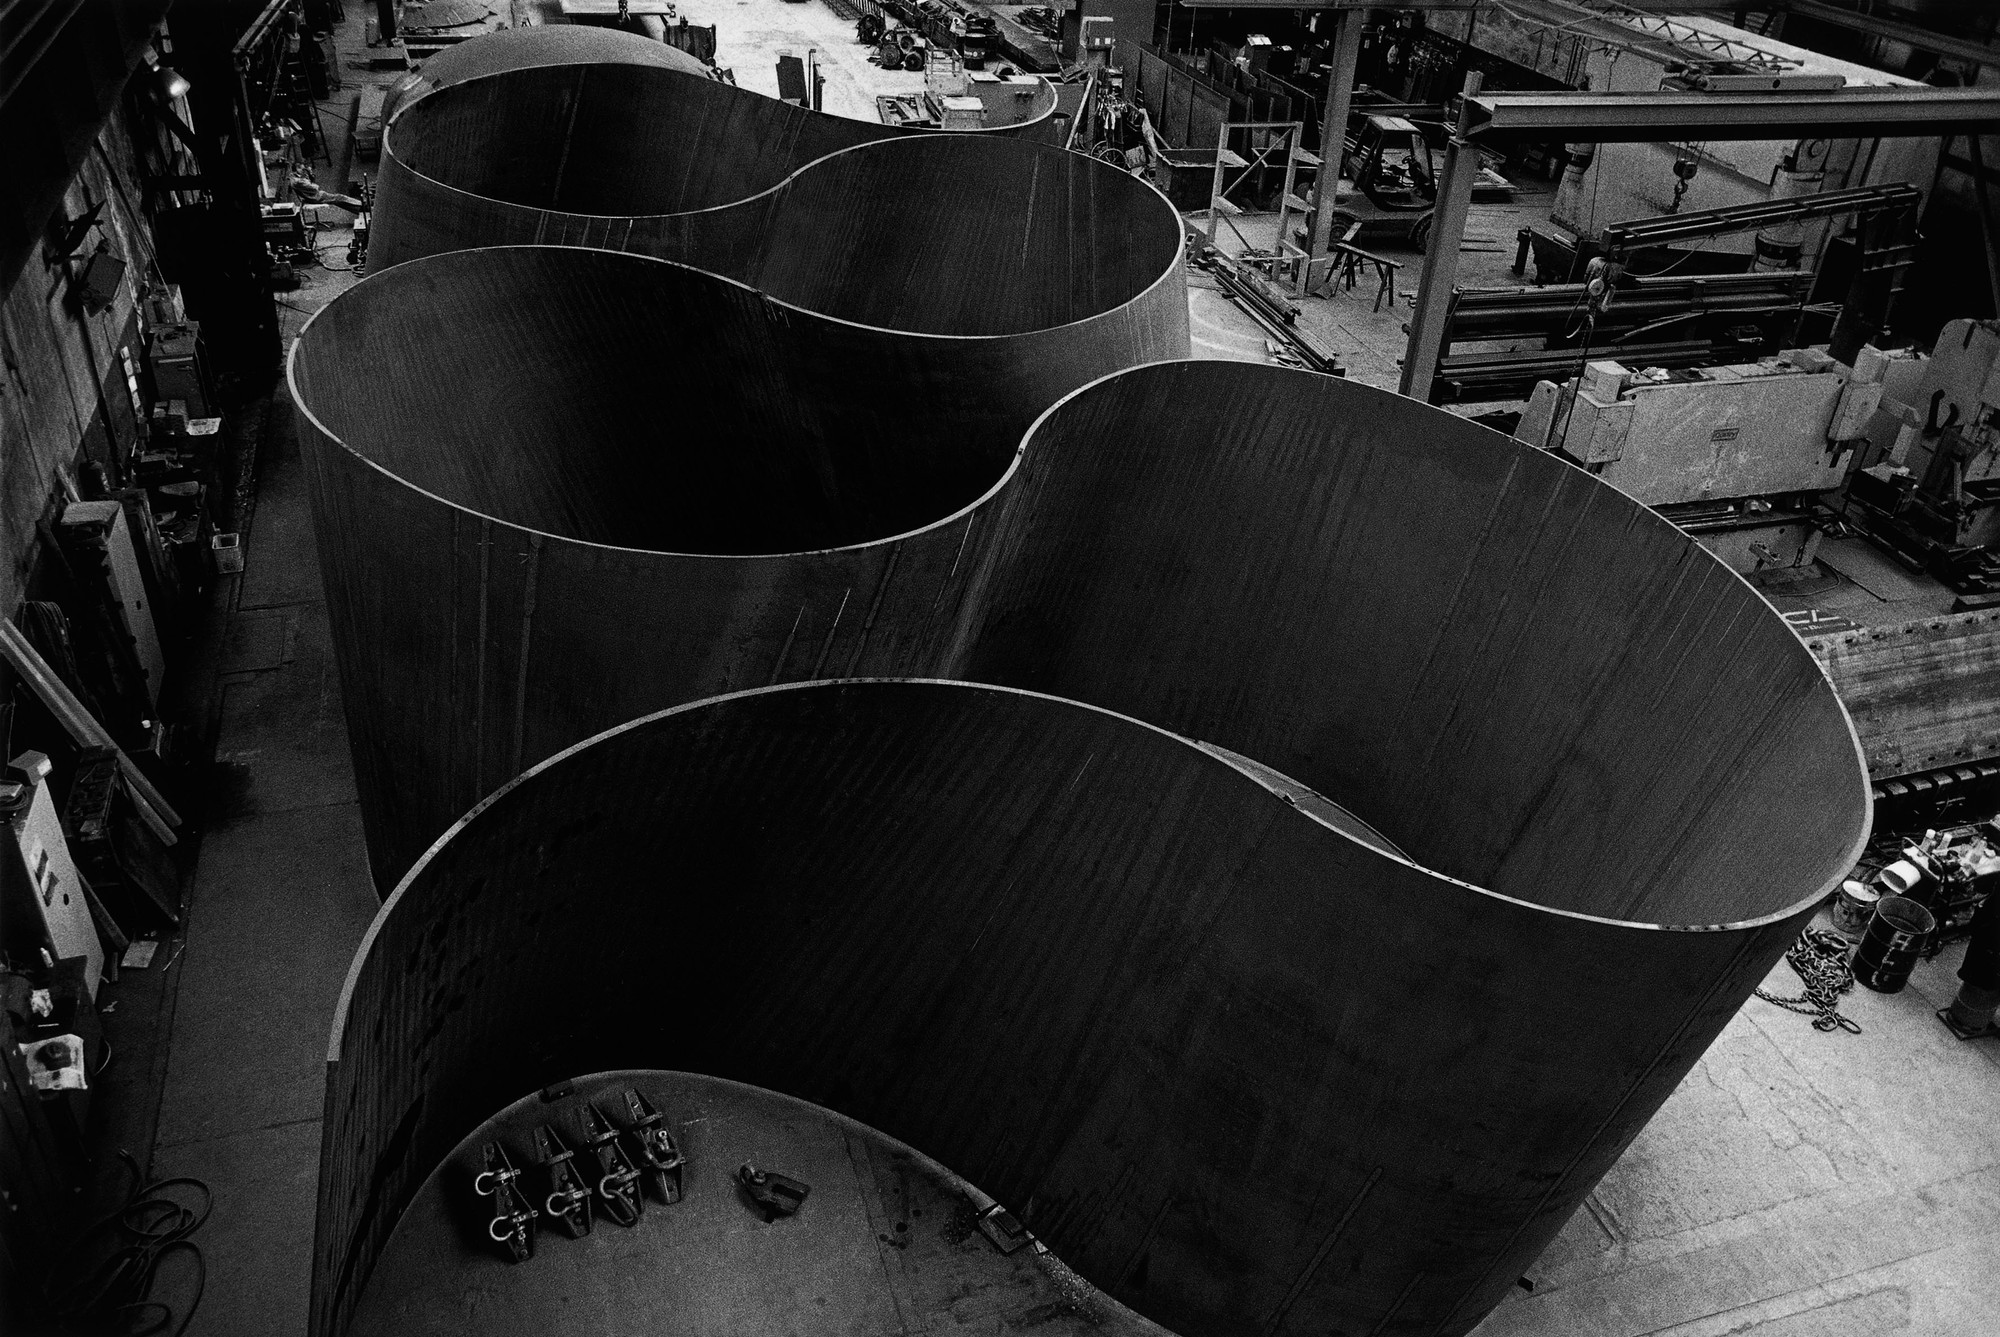 Richard Serra
(American, born 1939)
Band
2006